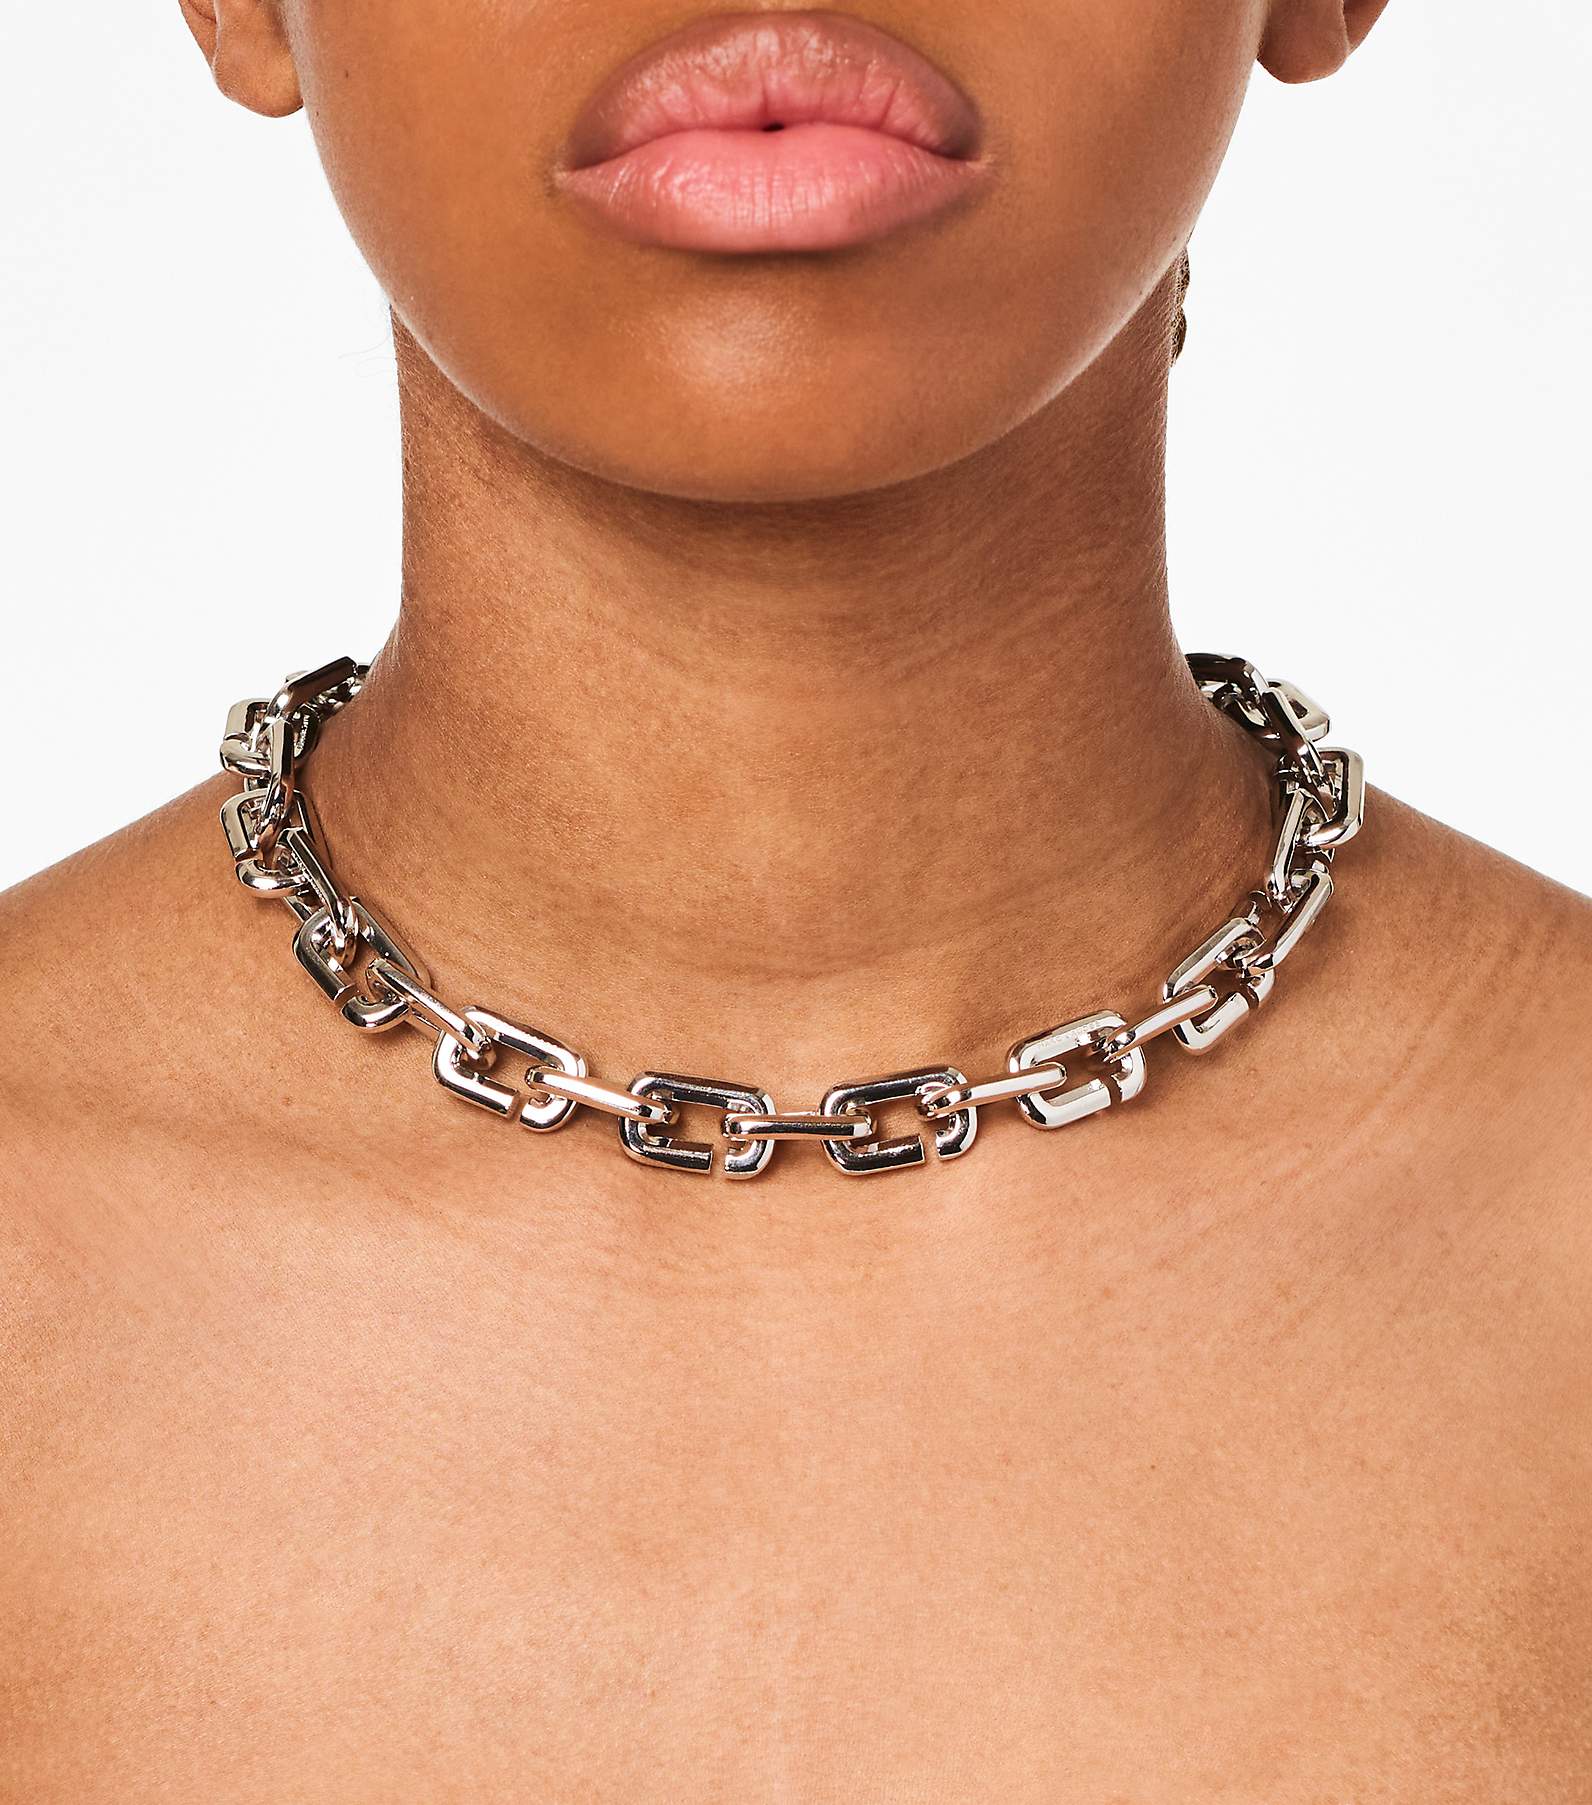 Zipper necklace reimagines high fashion